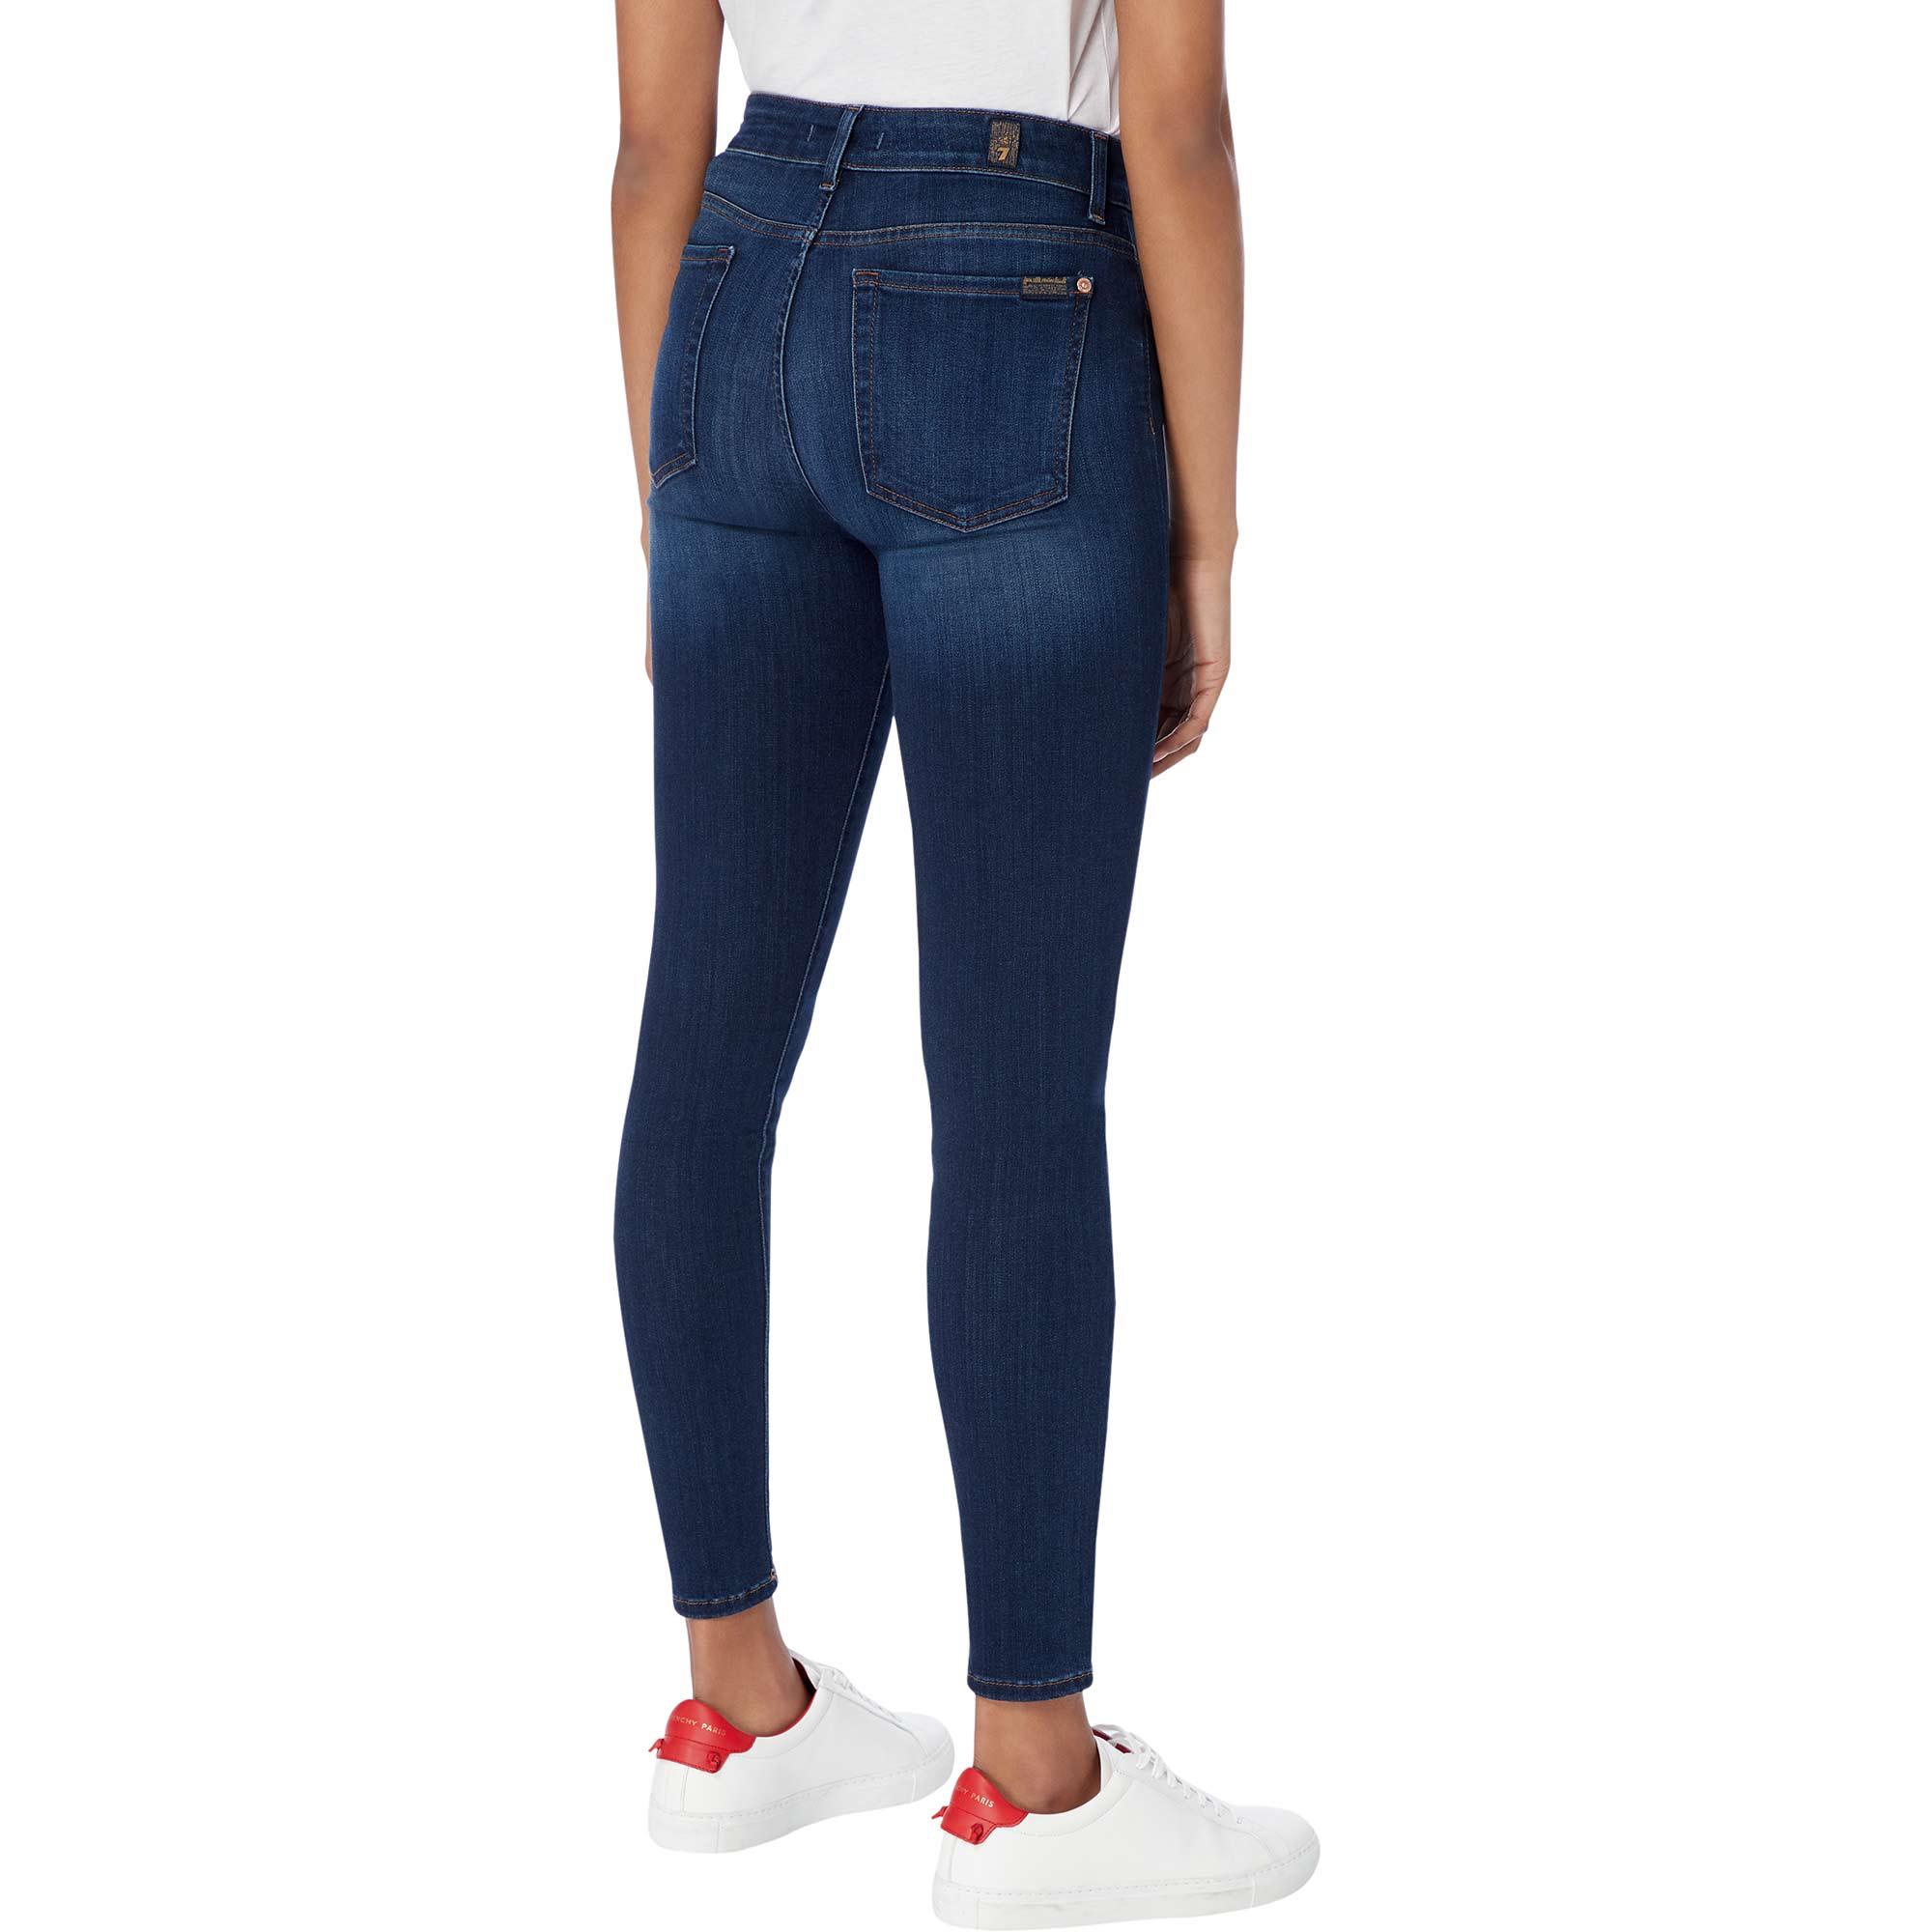 Aubrey High-Rise Slim Illusion Skinny Jeans